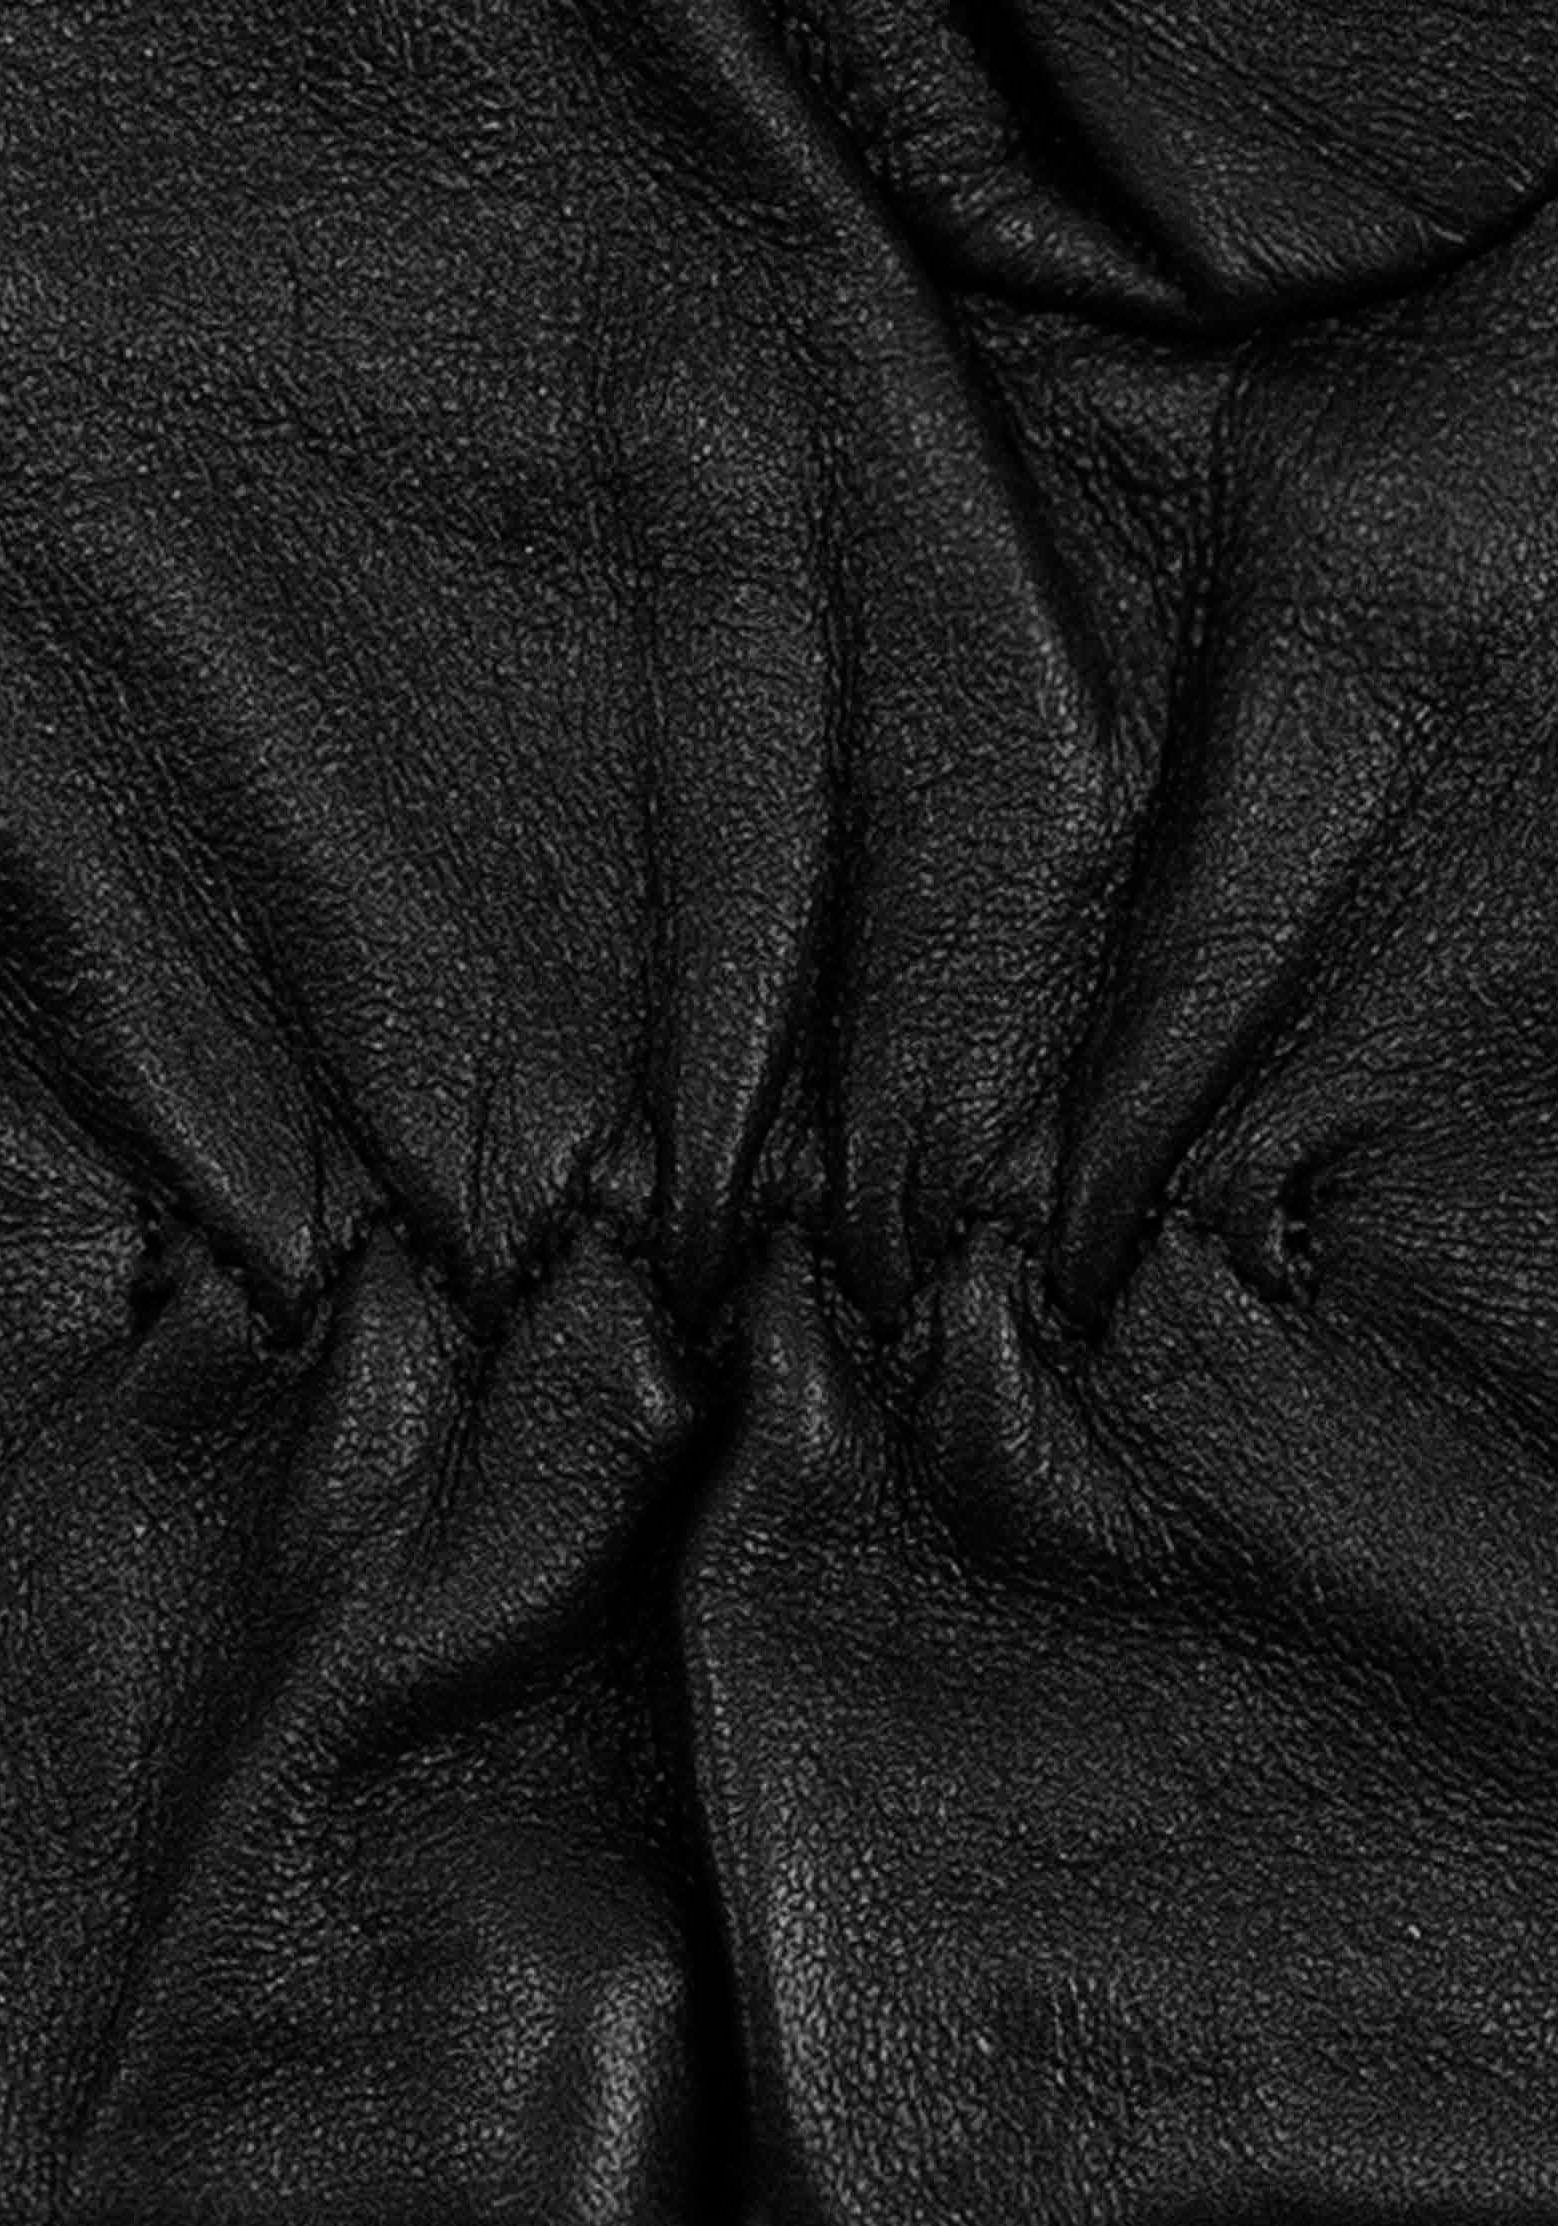 KESSLER Lederhandschuhe Chelsea Touchfunktion, Zierbiesen black Passform, schlanke